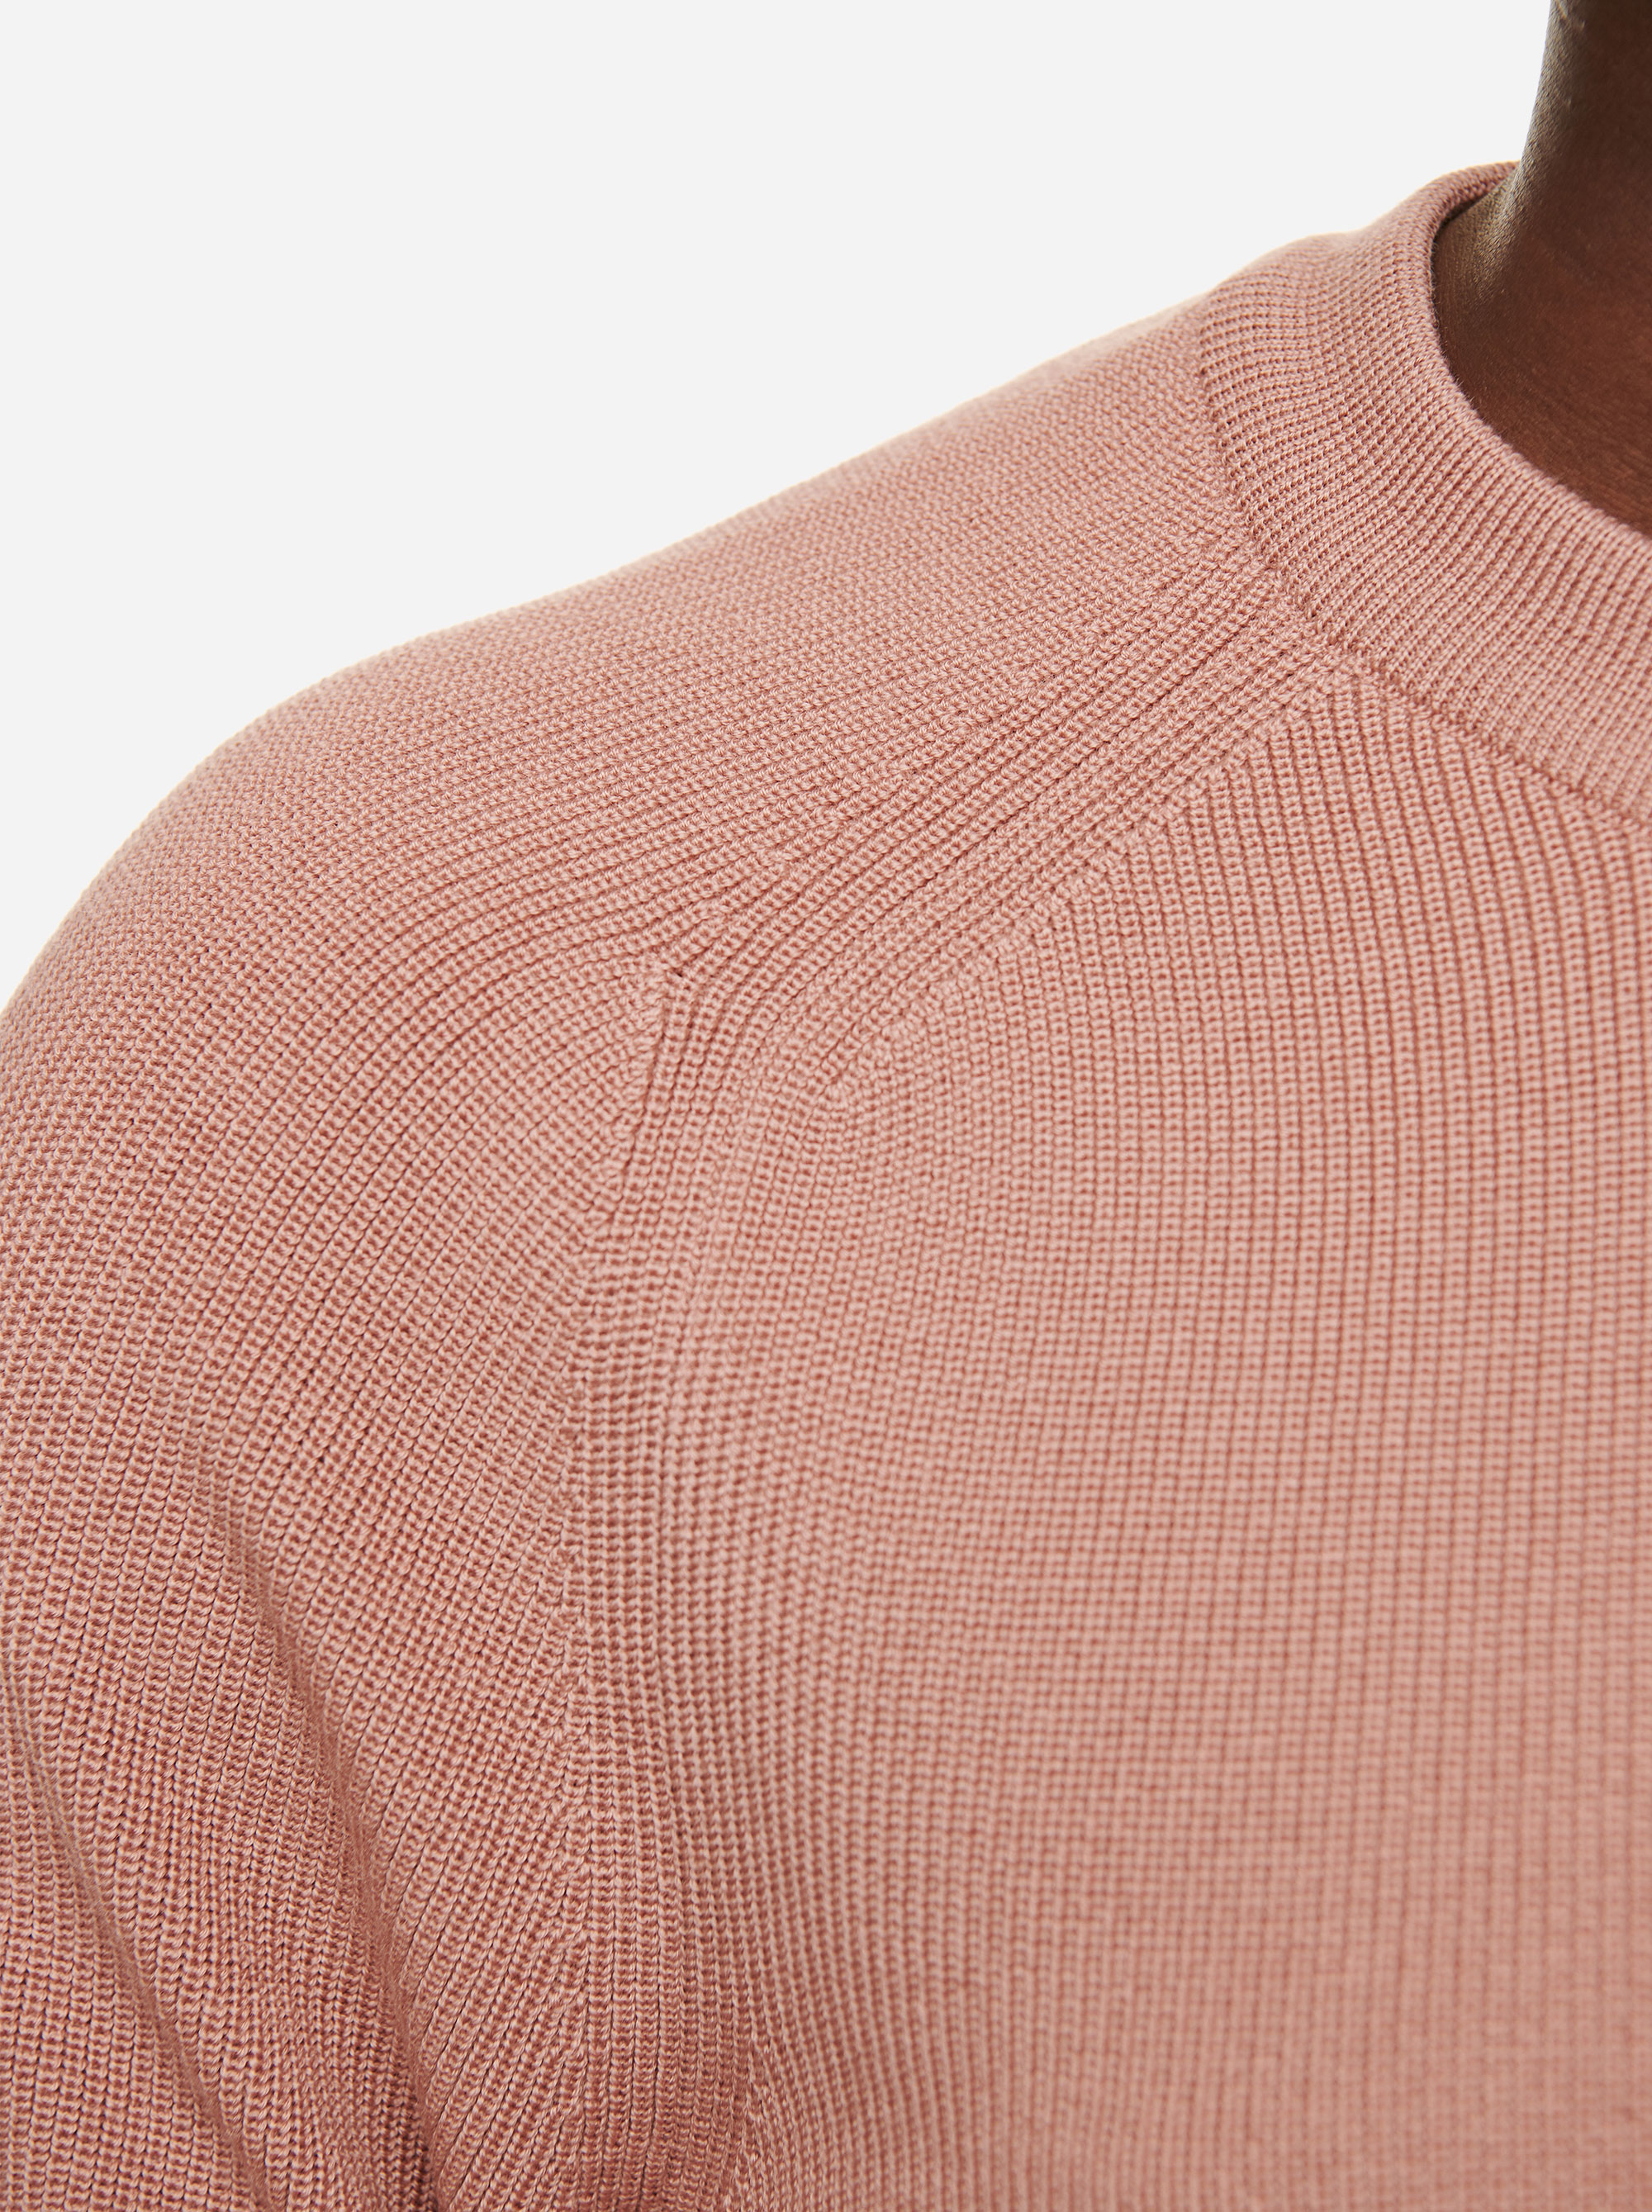 Teym - The Merino Sweater - Men - Pink - 3